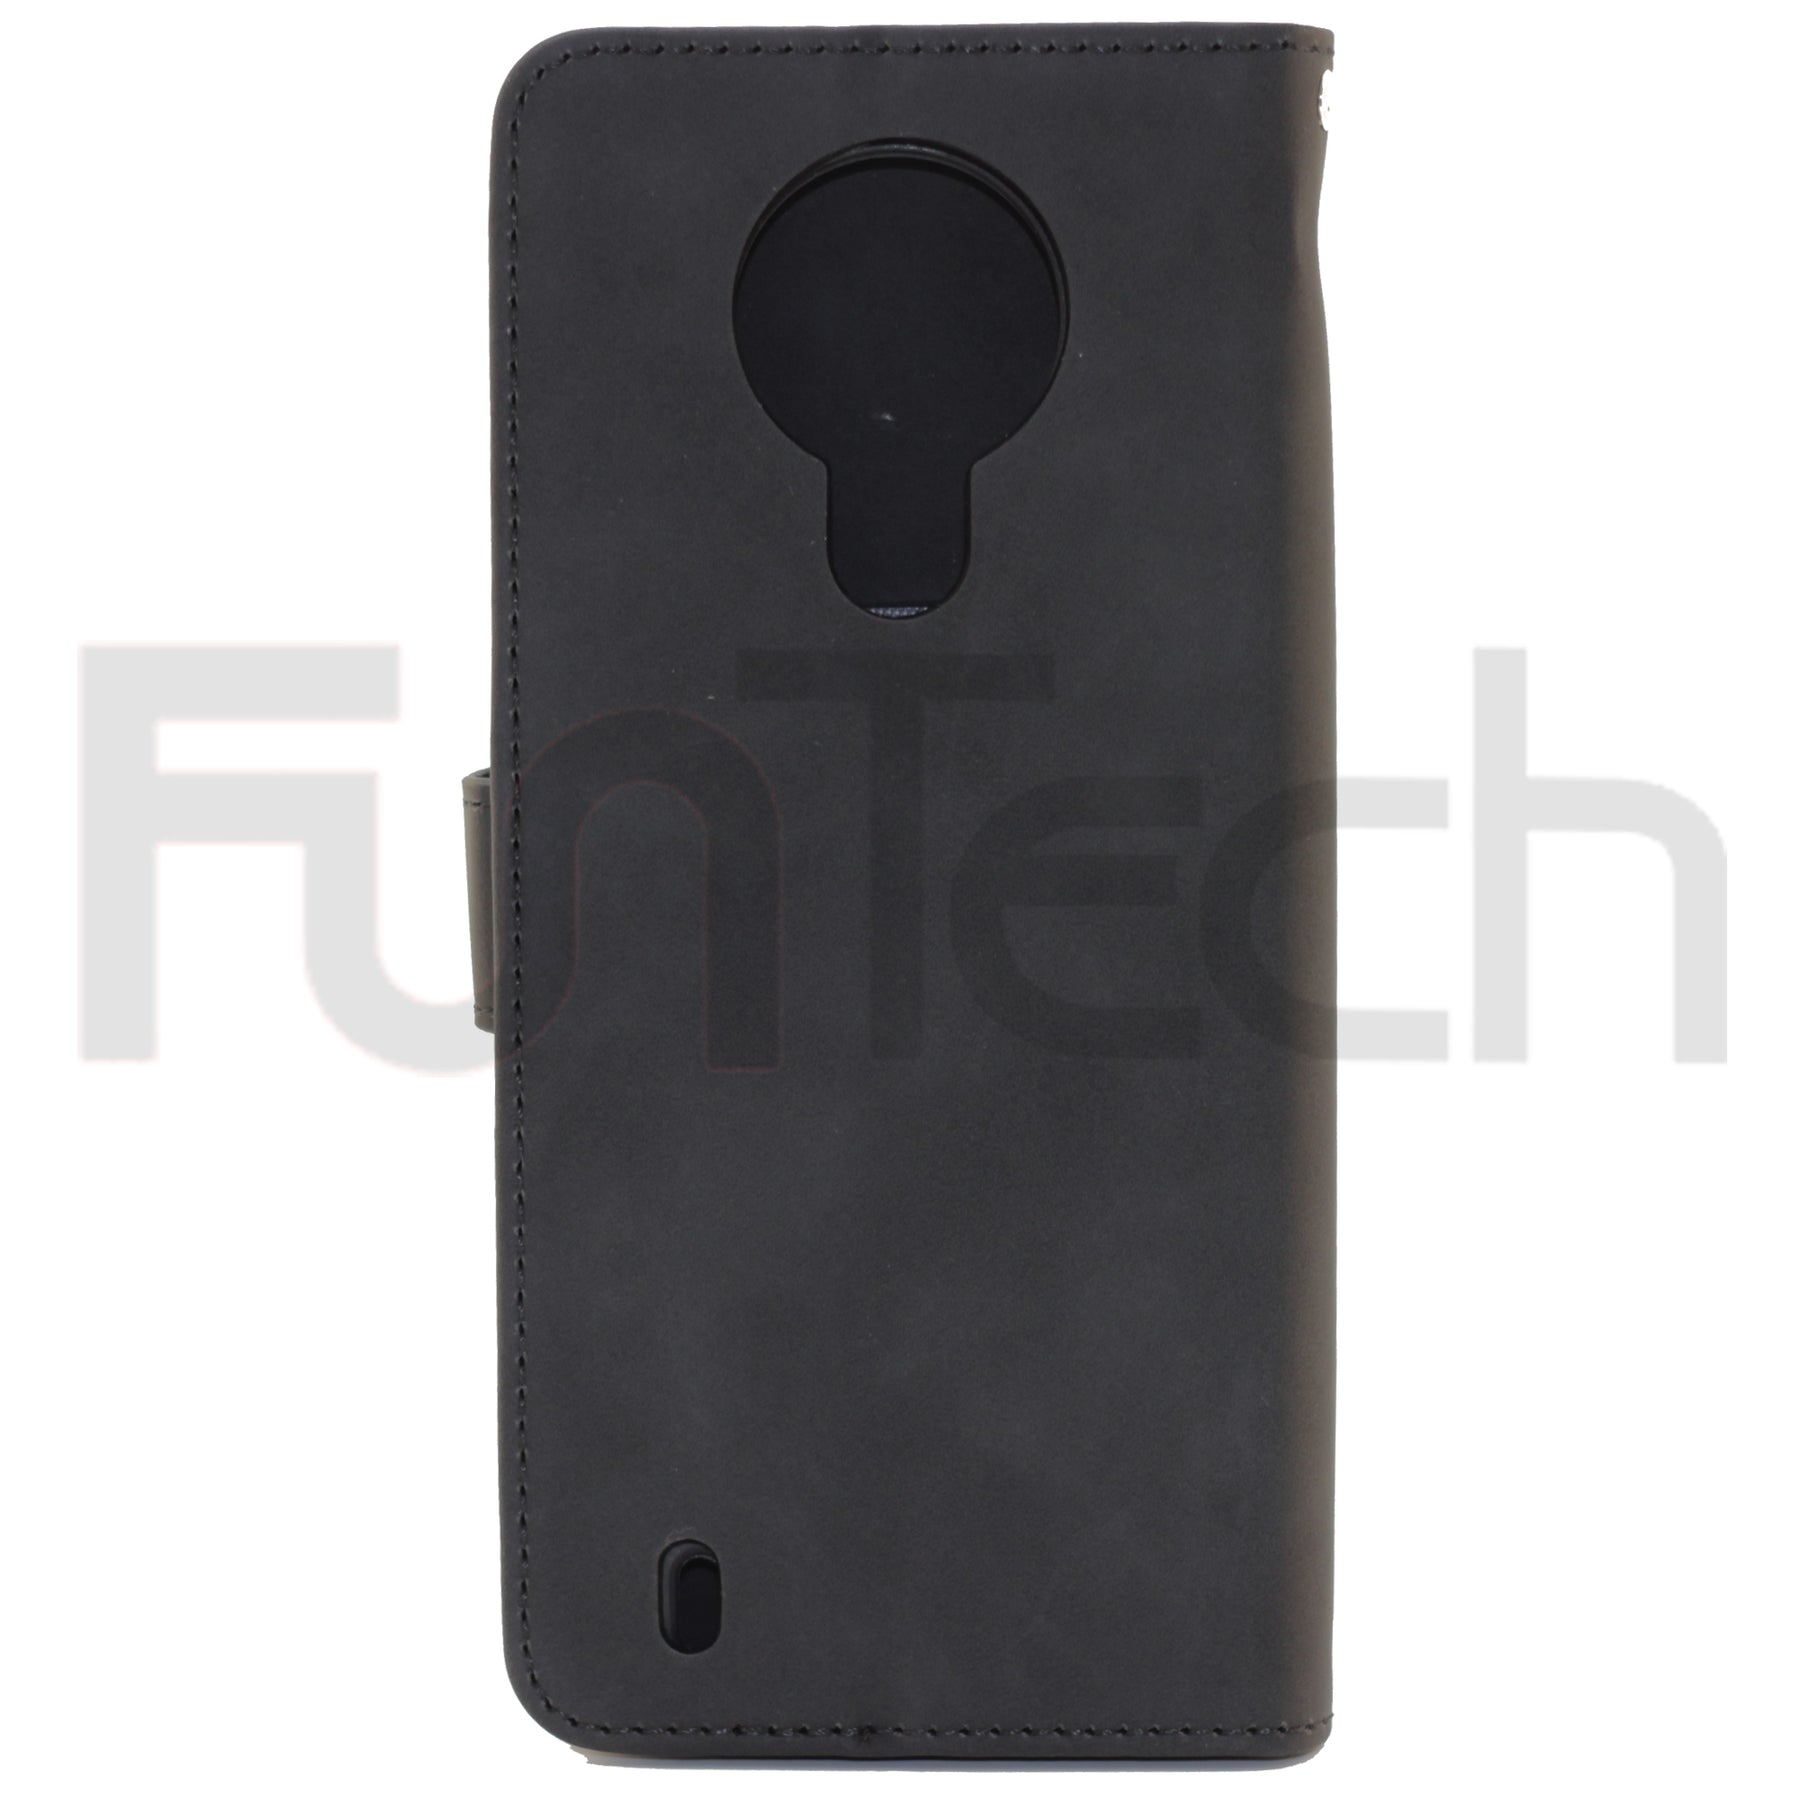 Nokia 1.4, Leather Wallet Case, Color Black,